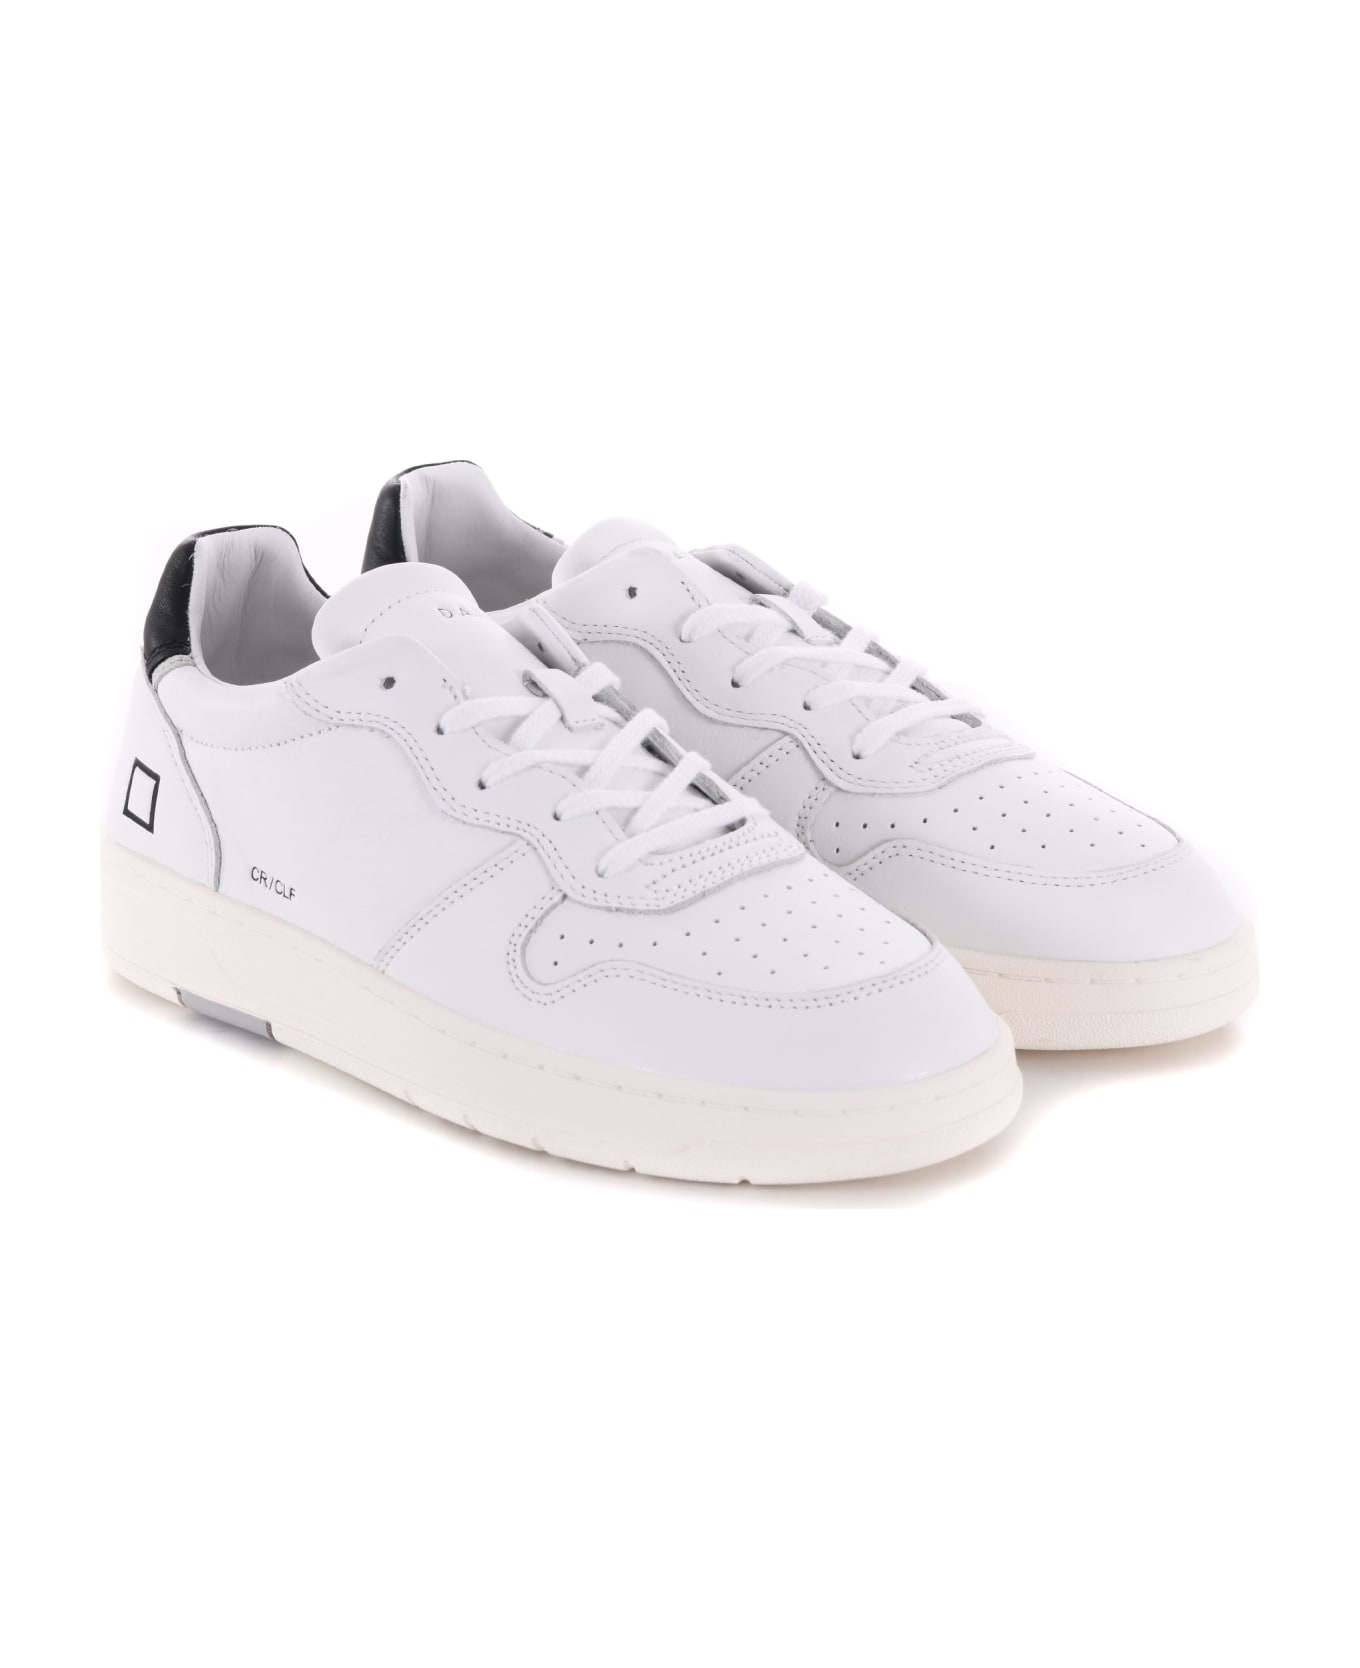 D.A.T.E. Sneakers "court Calf" In Leather - Bianco/nero